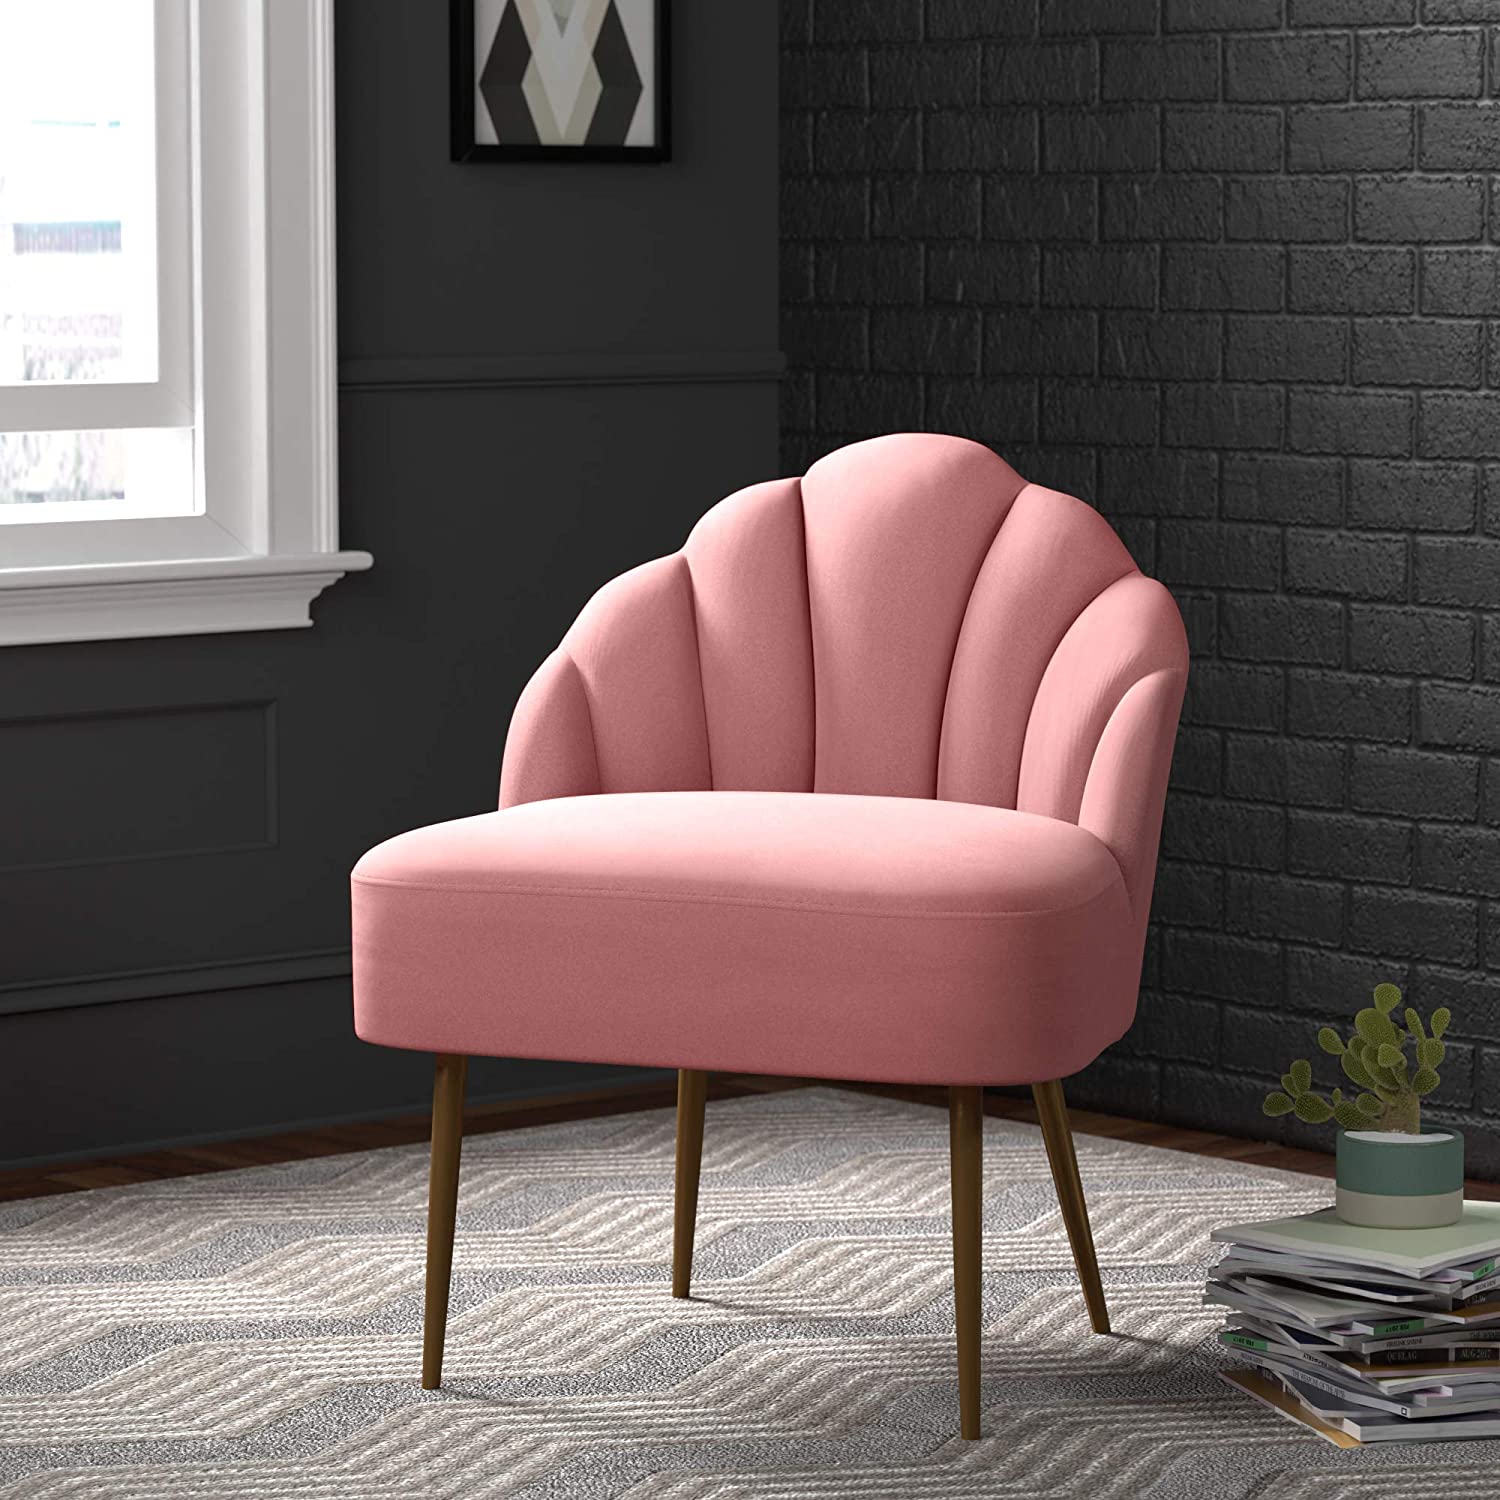 Sofa Chair Rose Teal Set Gkw